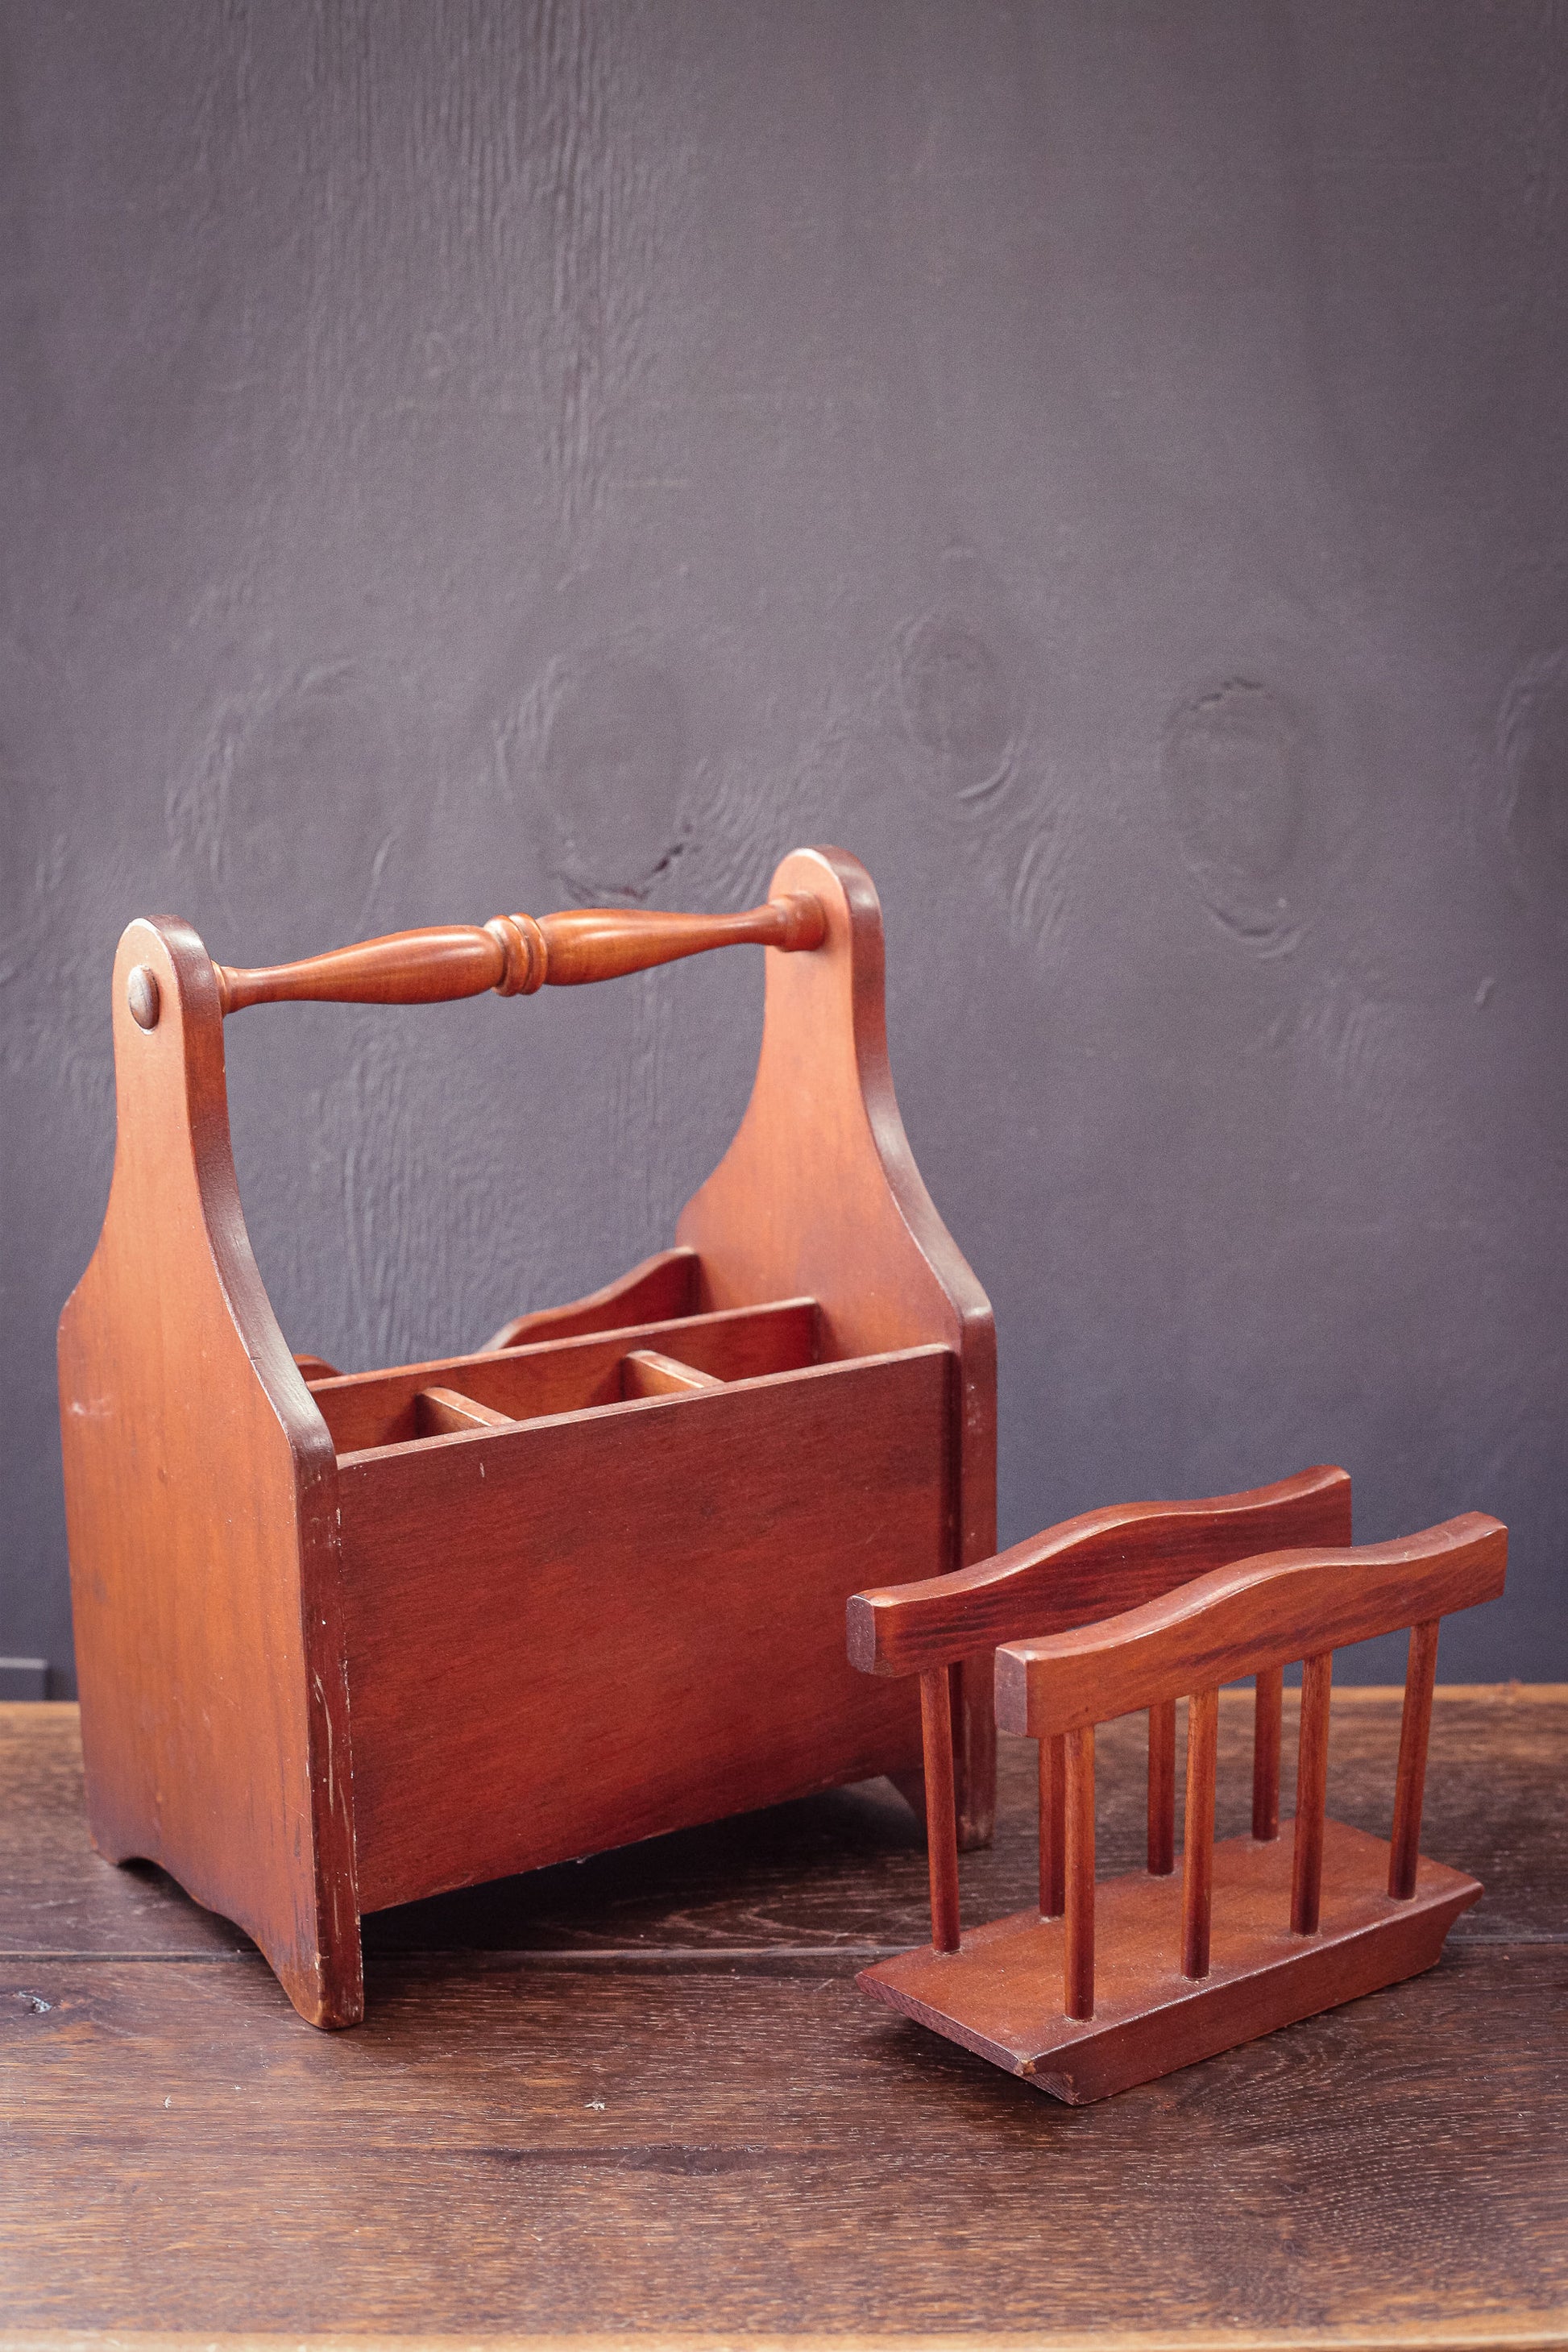 Wooden Cutlery Caddy and Napkin Holder Set - Vintage Wood Kitchen Set